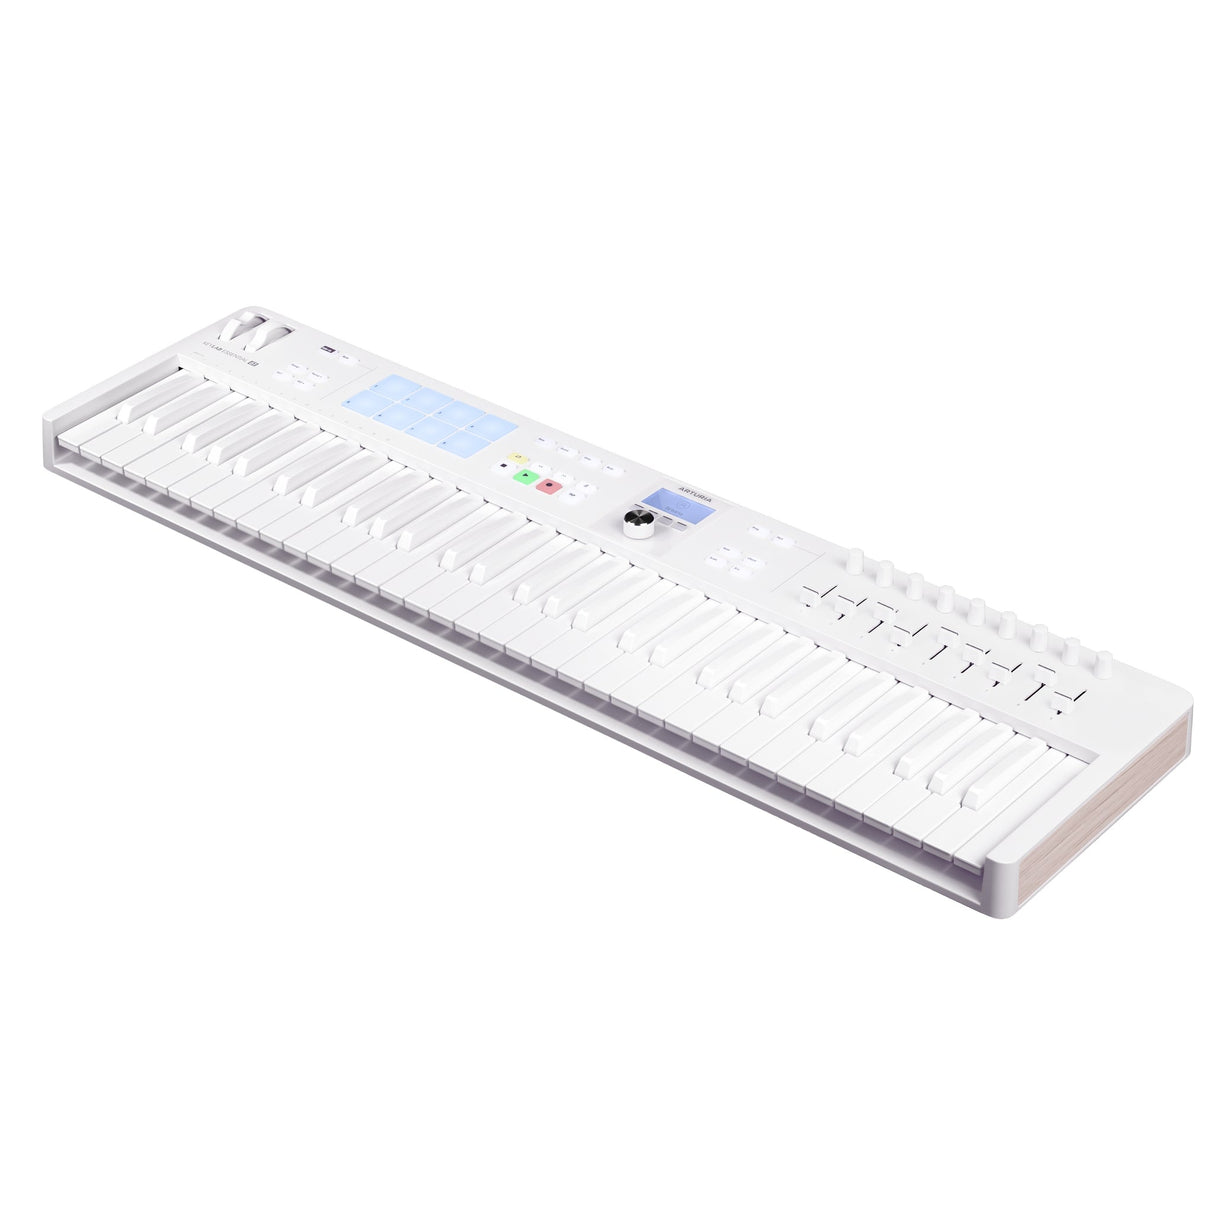 Arturia KeyLab Essential 61 mk3 61-Note MIDI Keyboard Controller, Alpine White